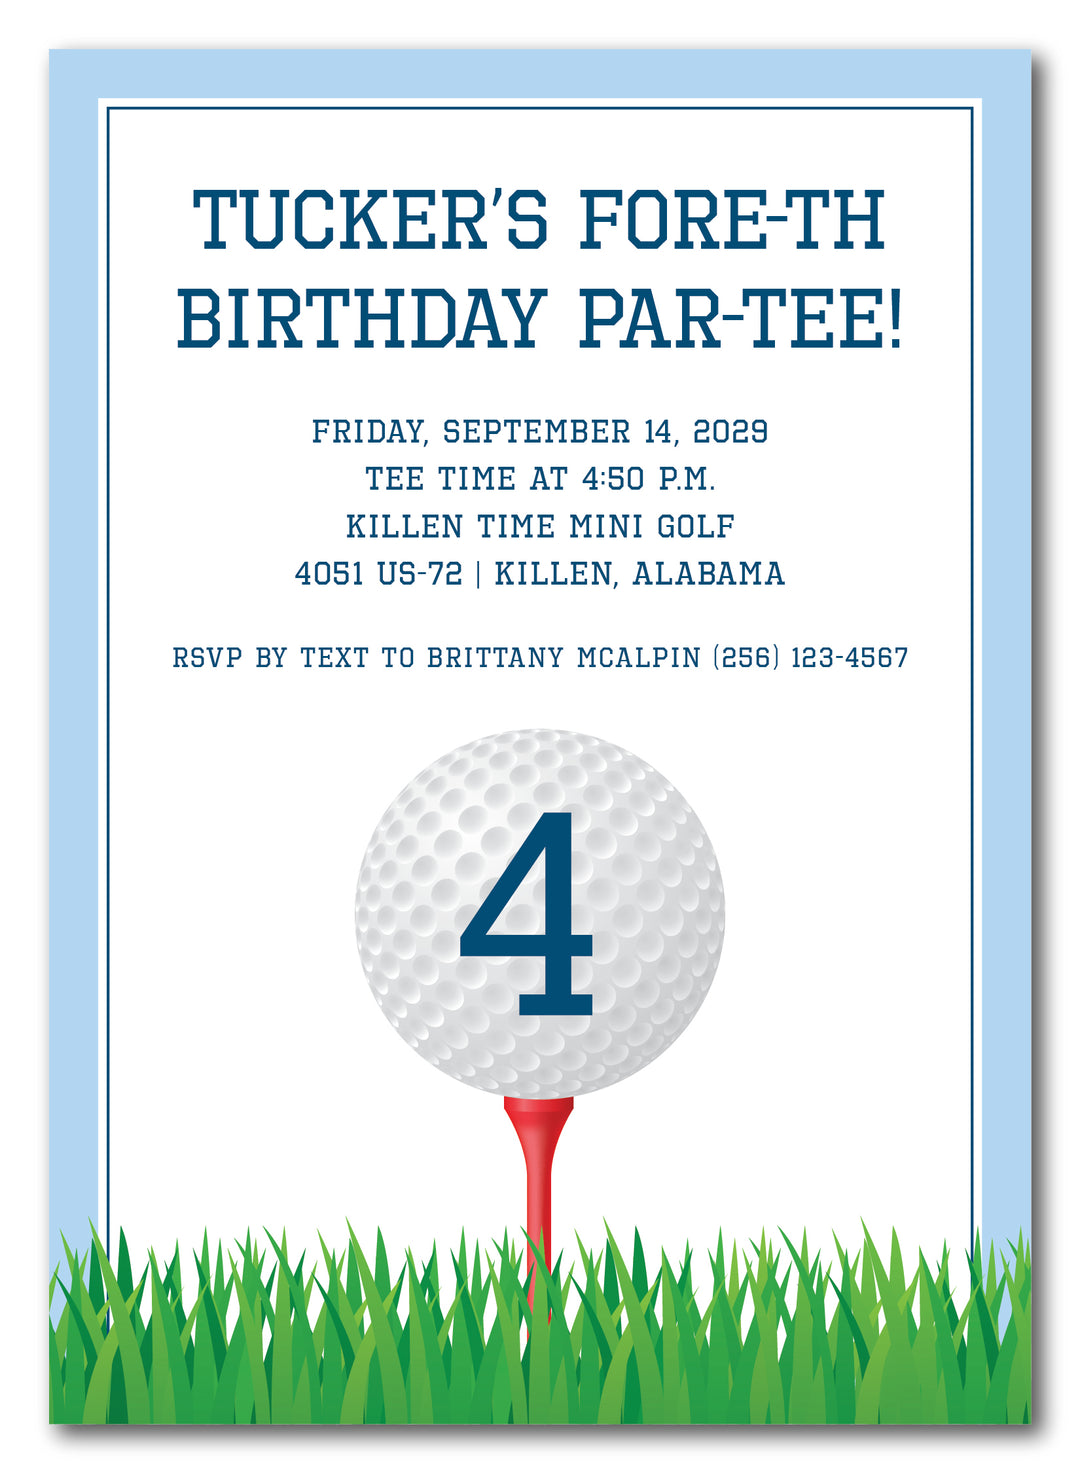 The Golf III Birthday Party Invitation